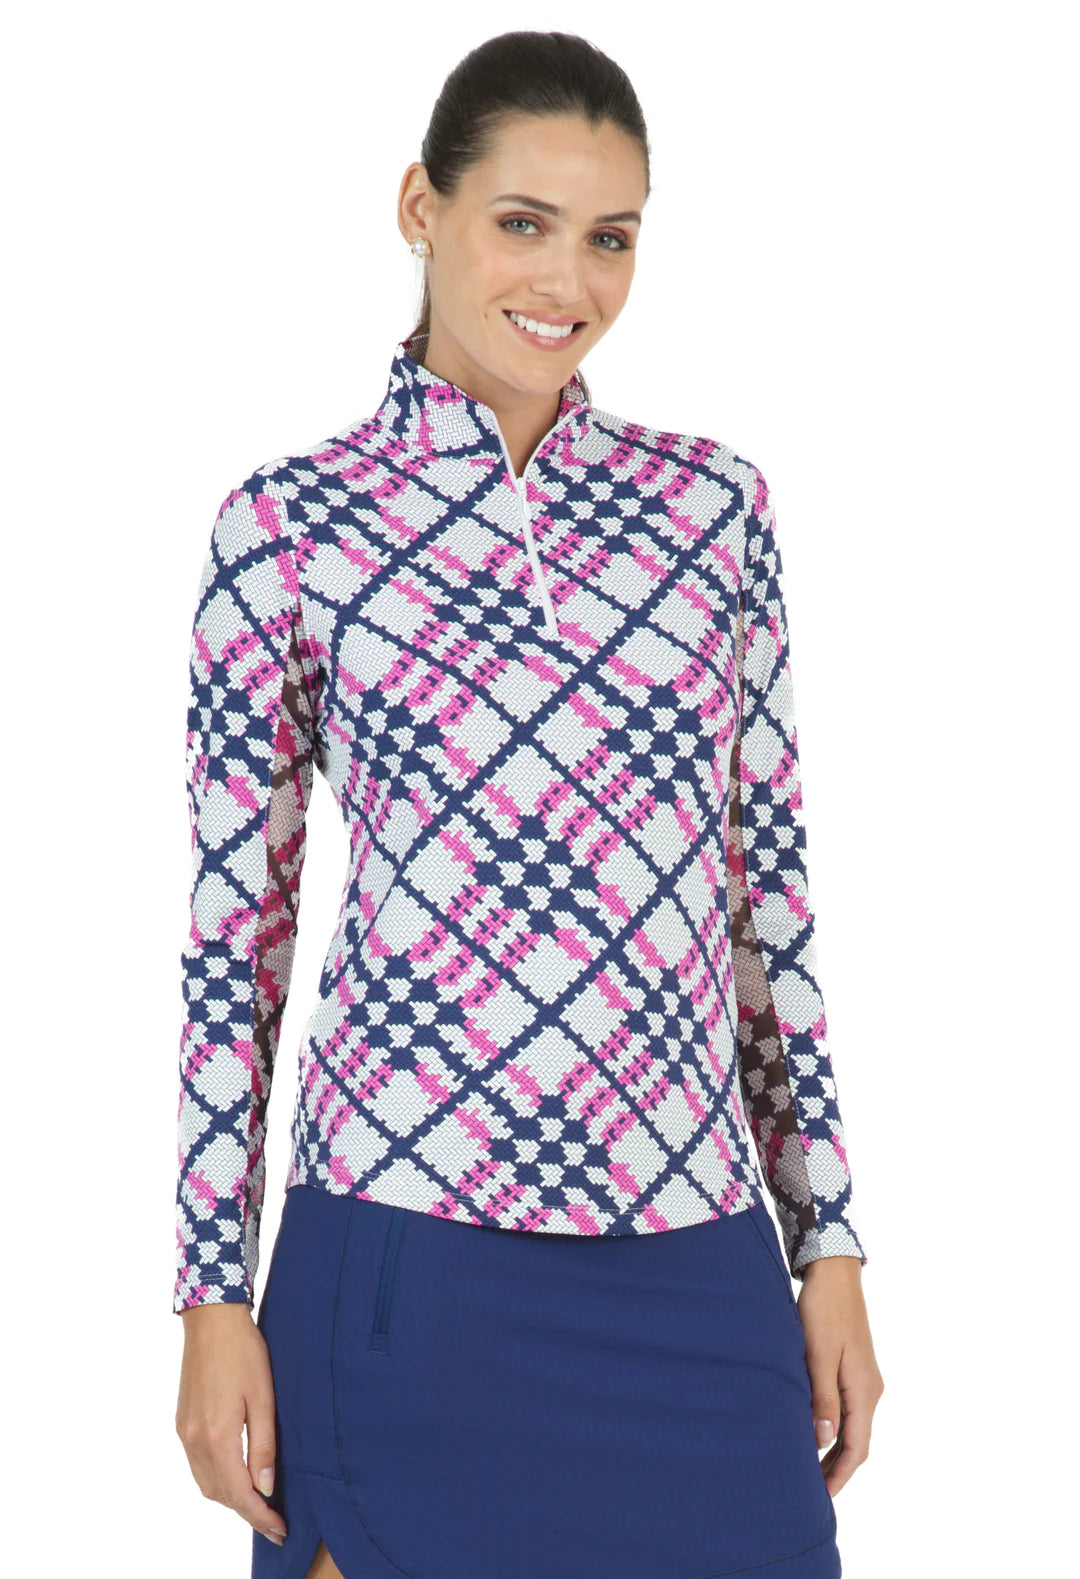 IBKUL- Long Sleeve Sonika Hot Pink/Navy Zip Mock (Style#: 10653)